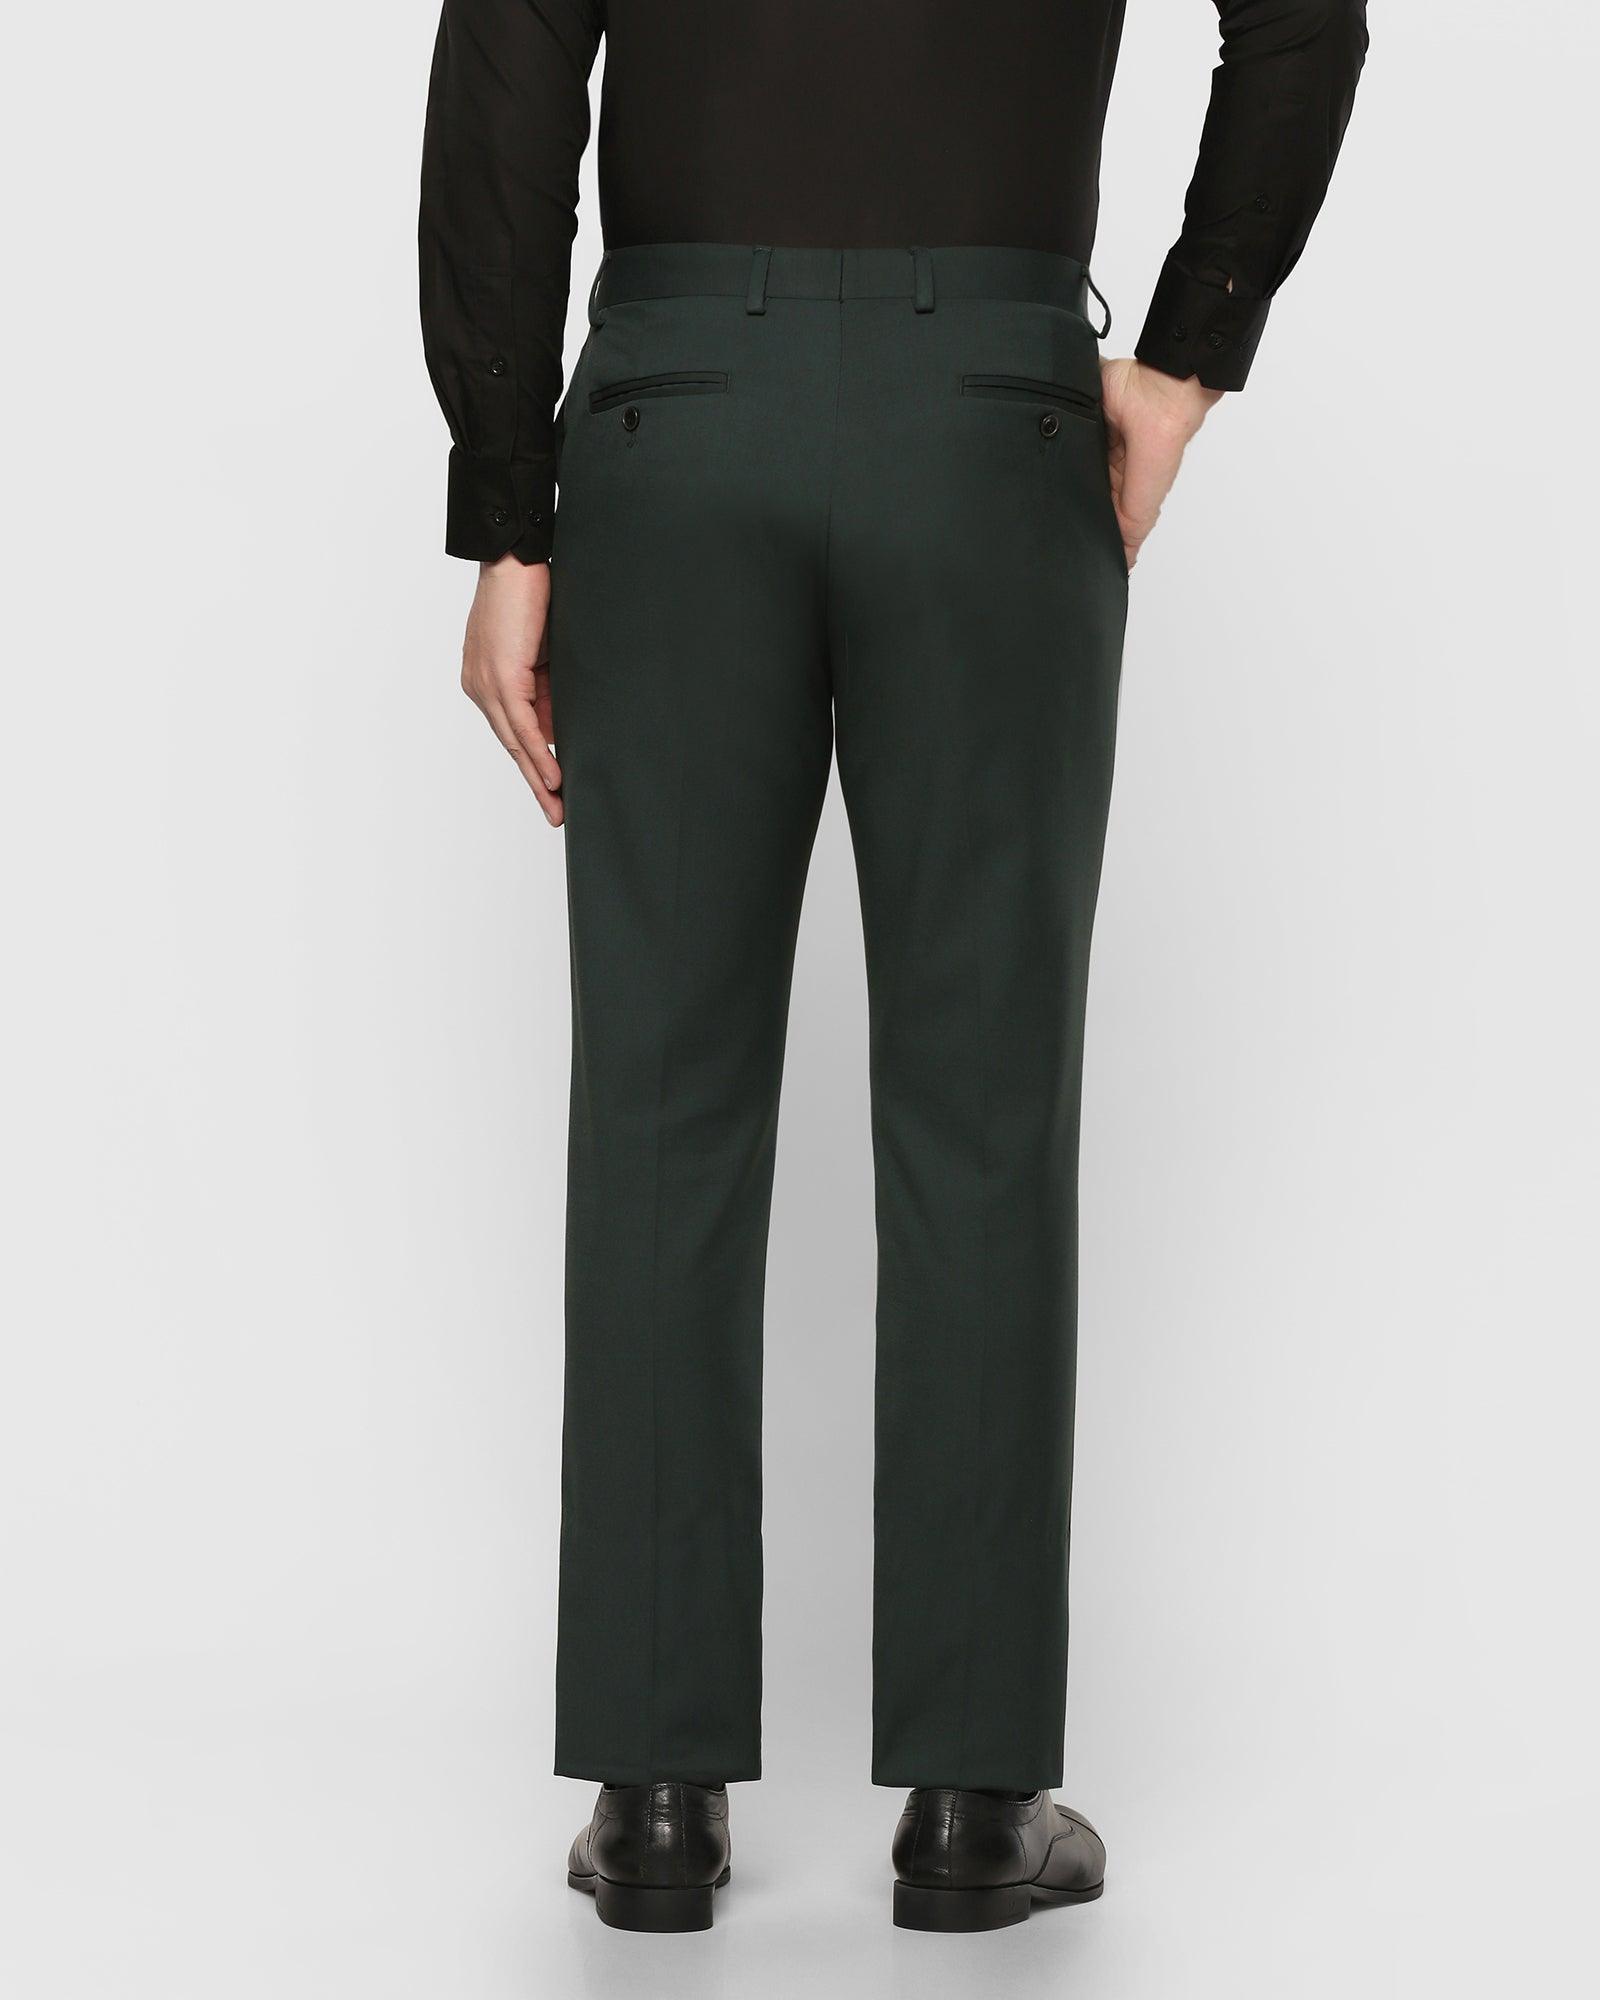 Slim Fit Suit trousers  Dark greygreen  Men  HM IN